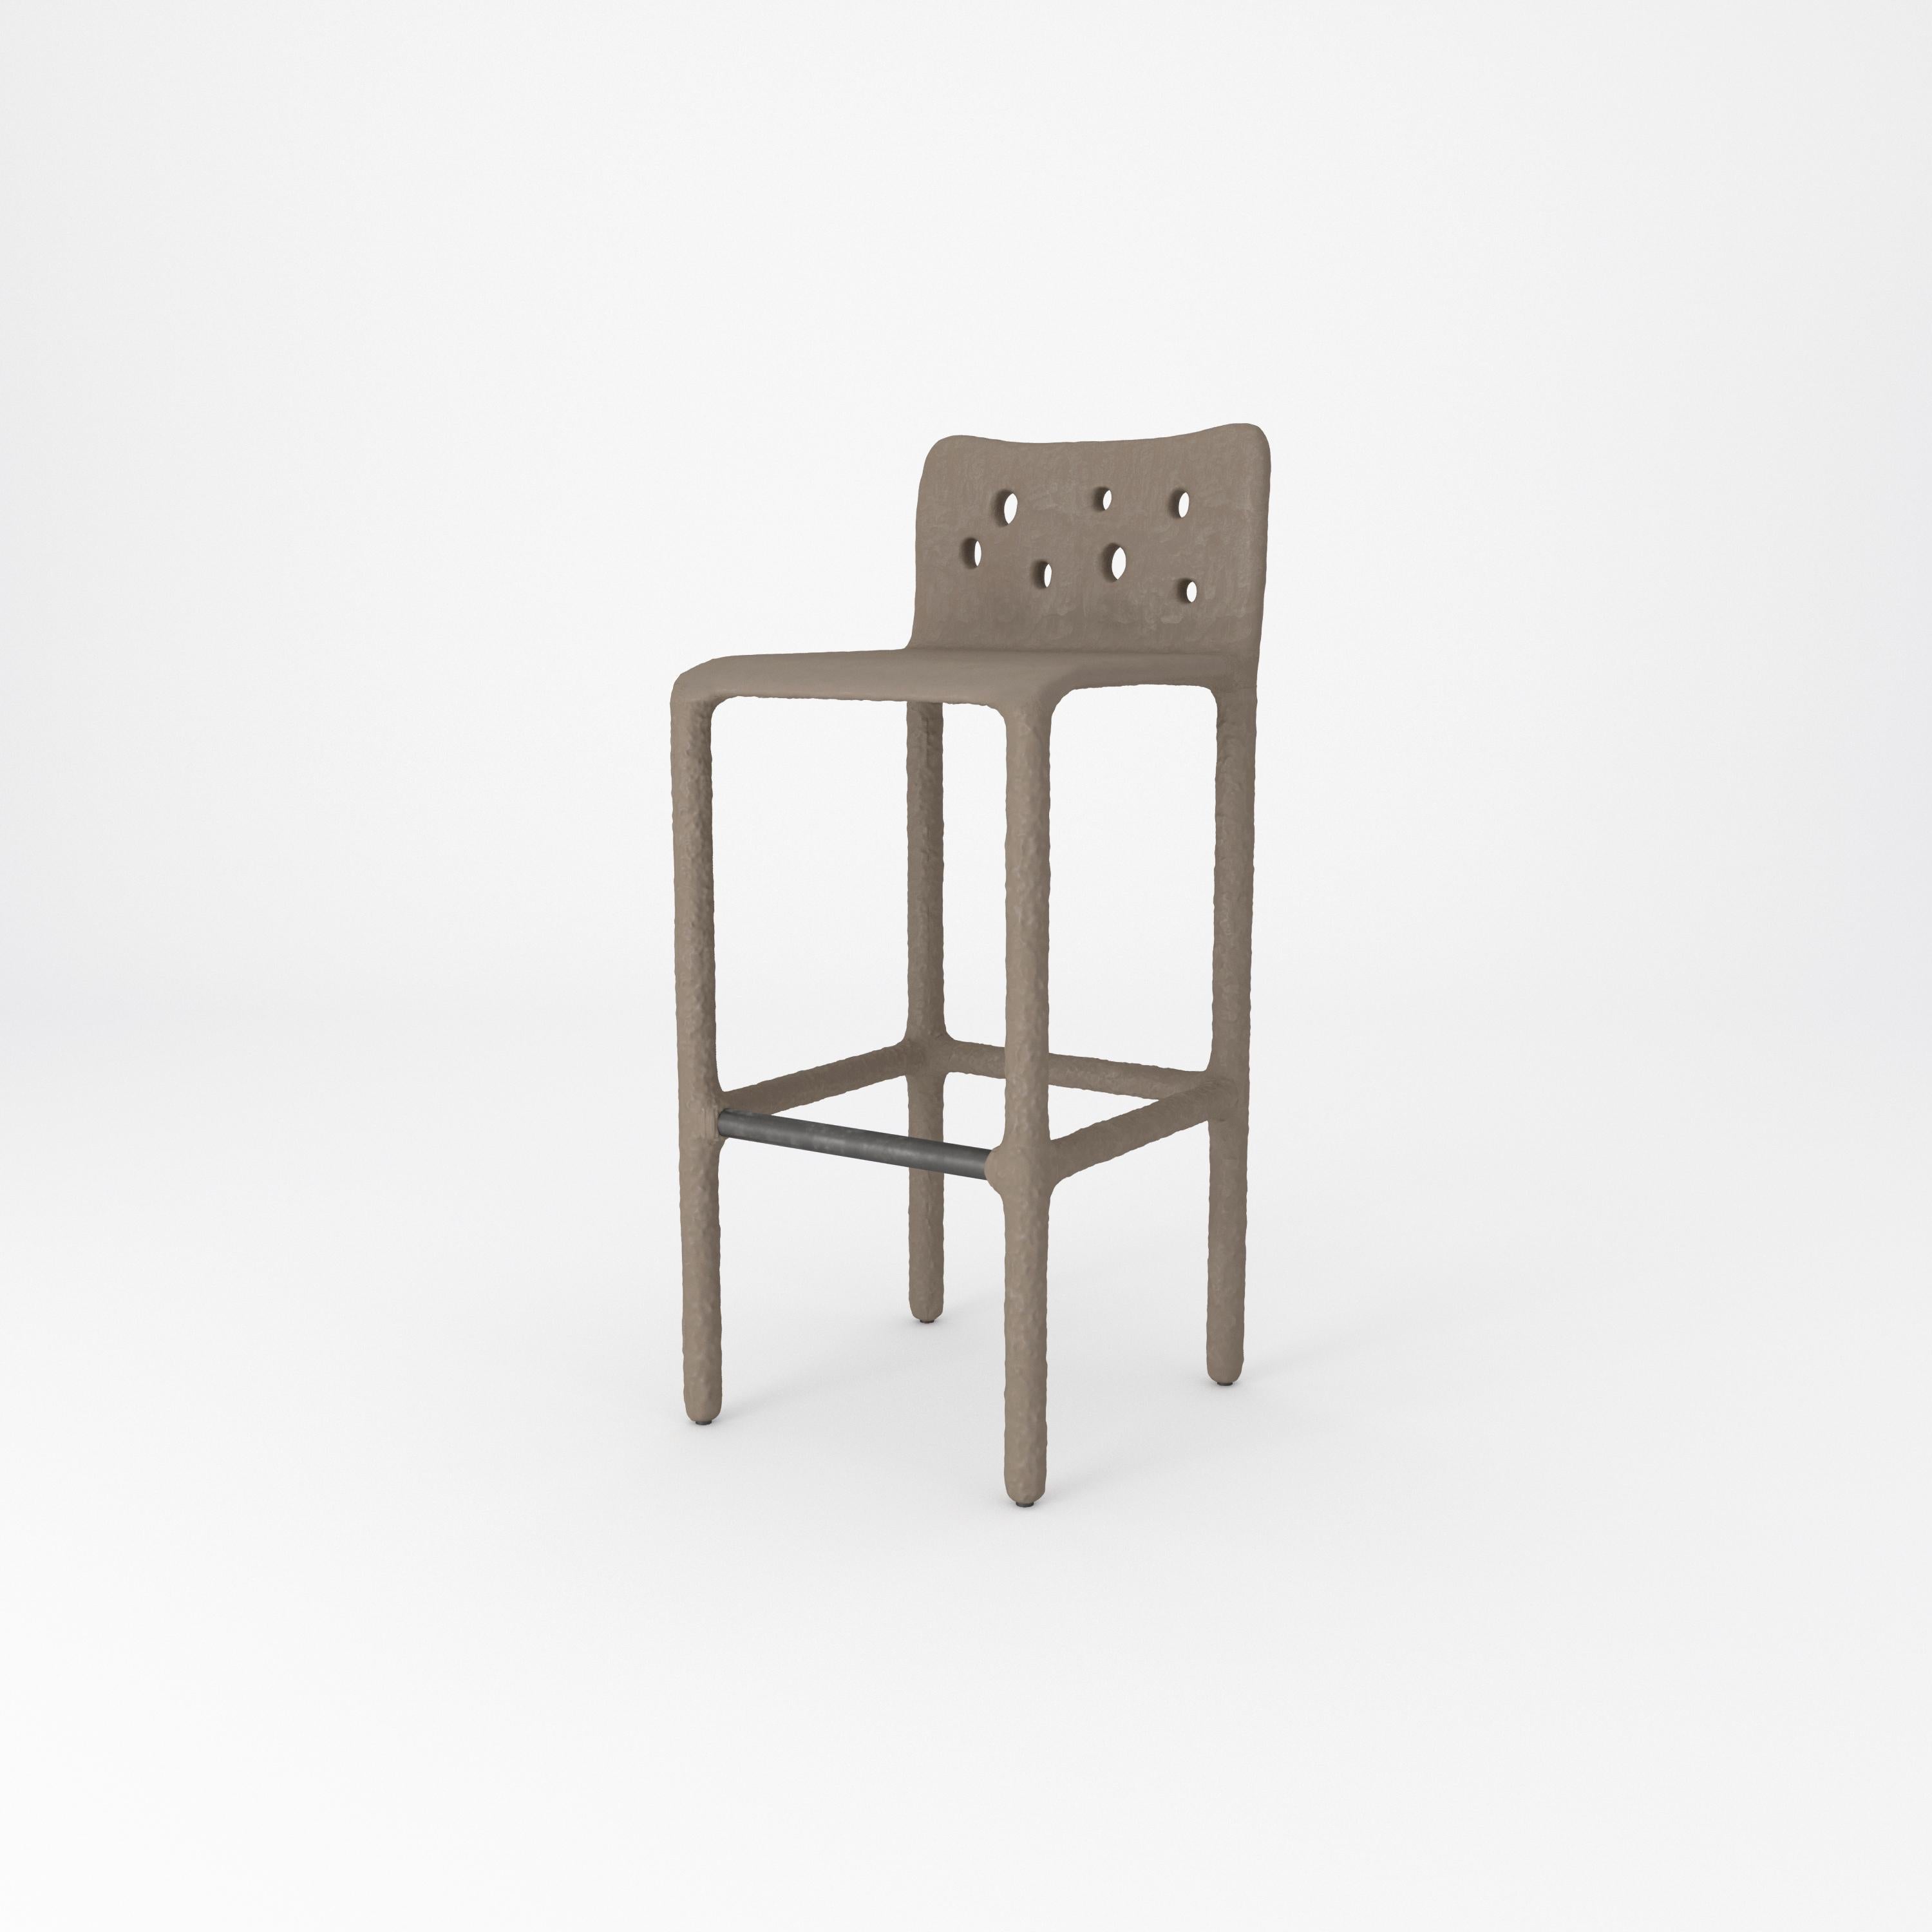 White Sculpted Contemporary Chair by FAINA 1